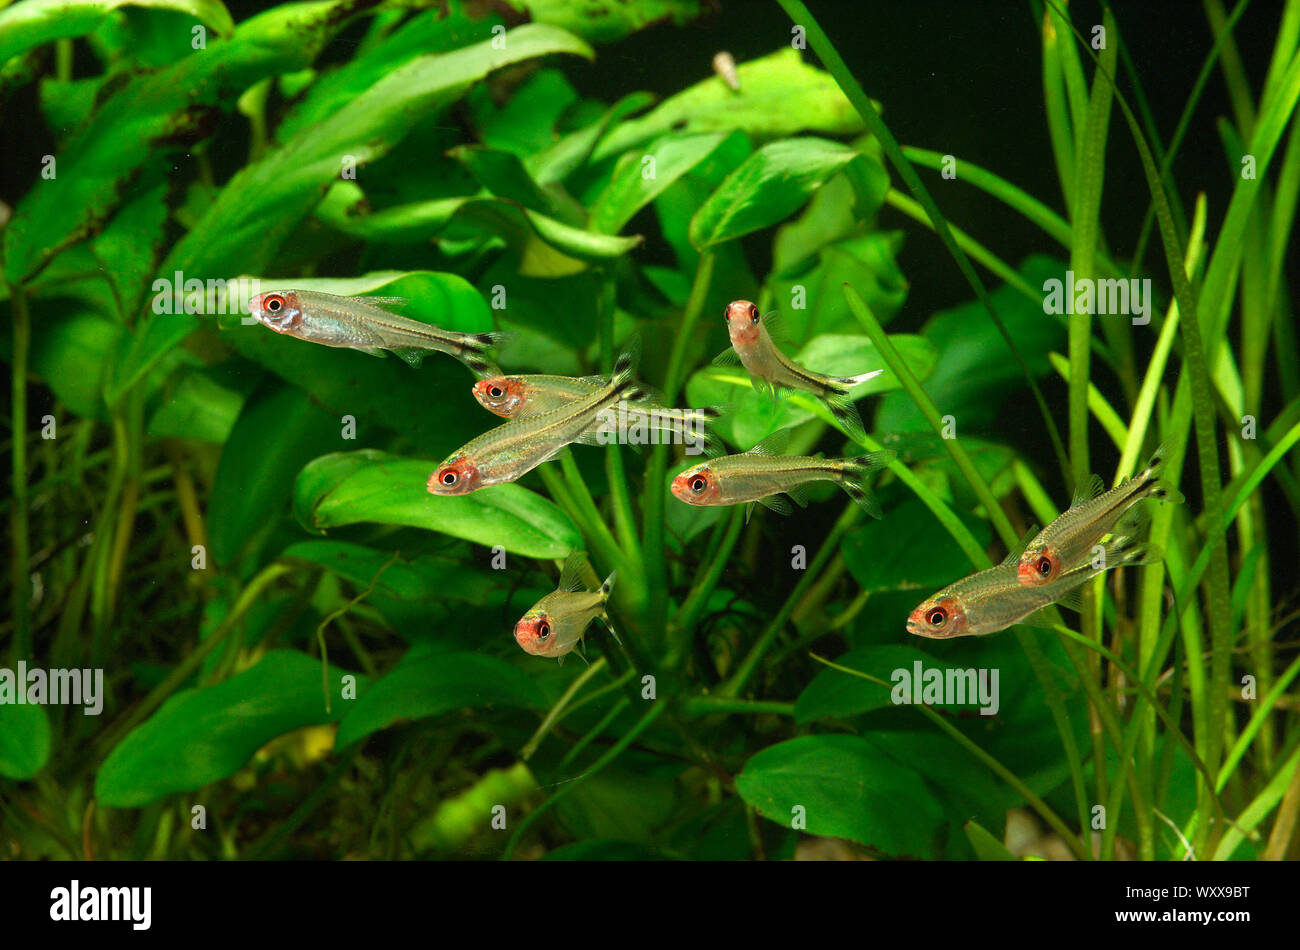 Rummy-nose tetra (Hemigrammus rhodostomus), group in aquarium Stock Photo